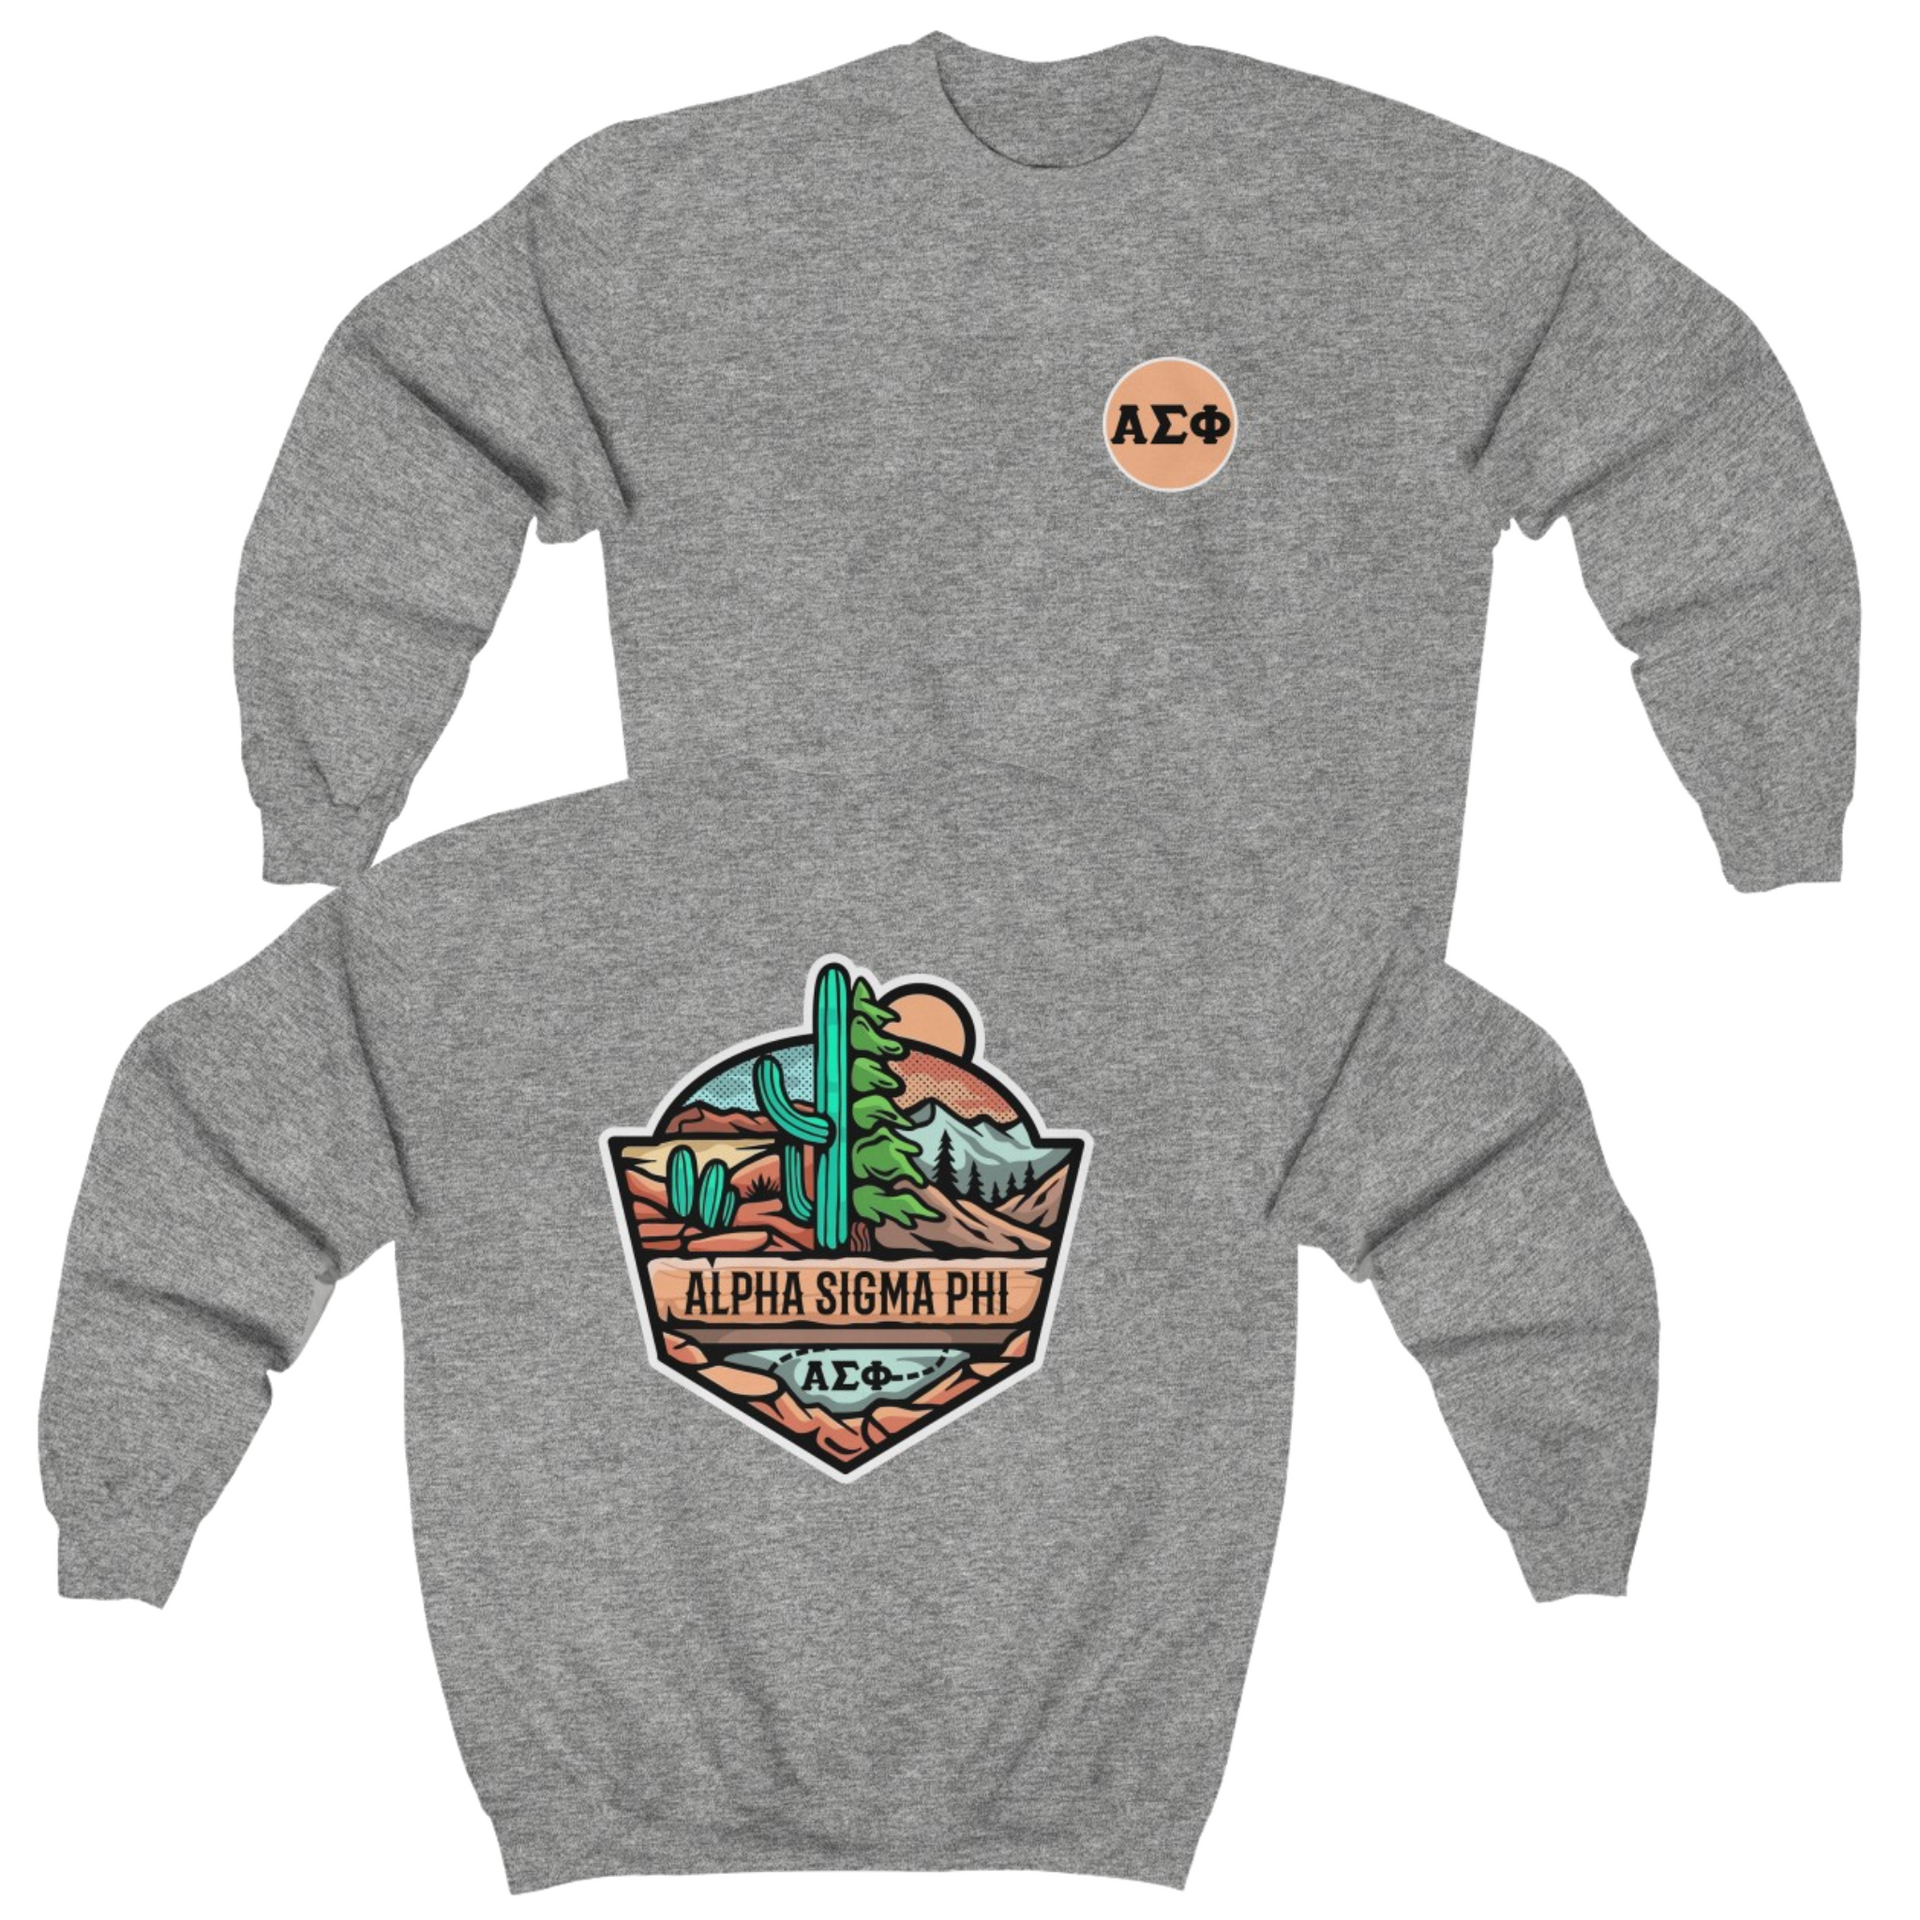 Grey Alpha Sigma Phi Graphic Crewneck Sweatshirt | Desert Mountains | Alpha Sigma Phi Fraternity Shirt